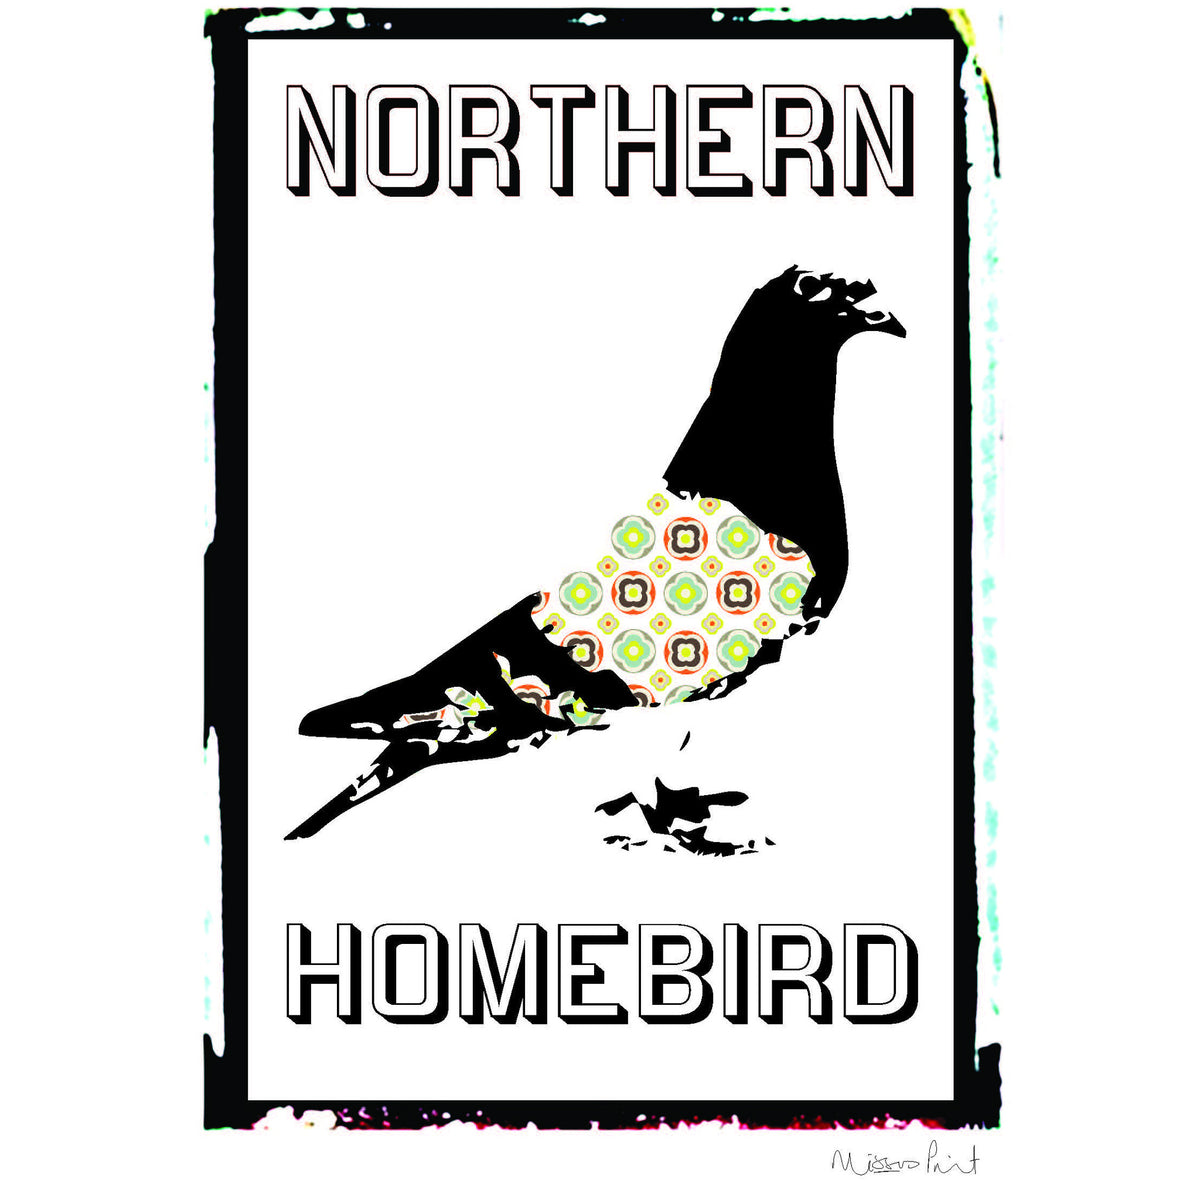 Northern Homebird print by Missus Print